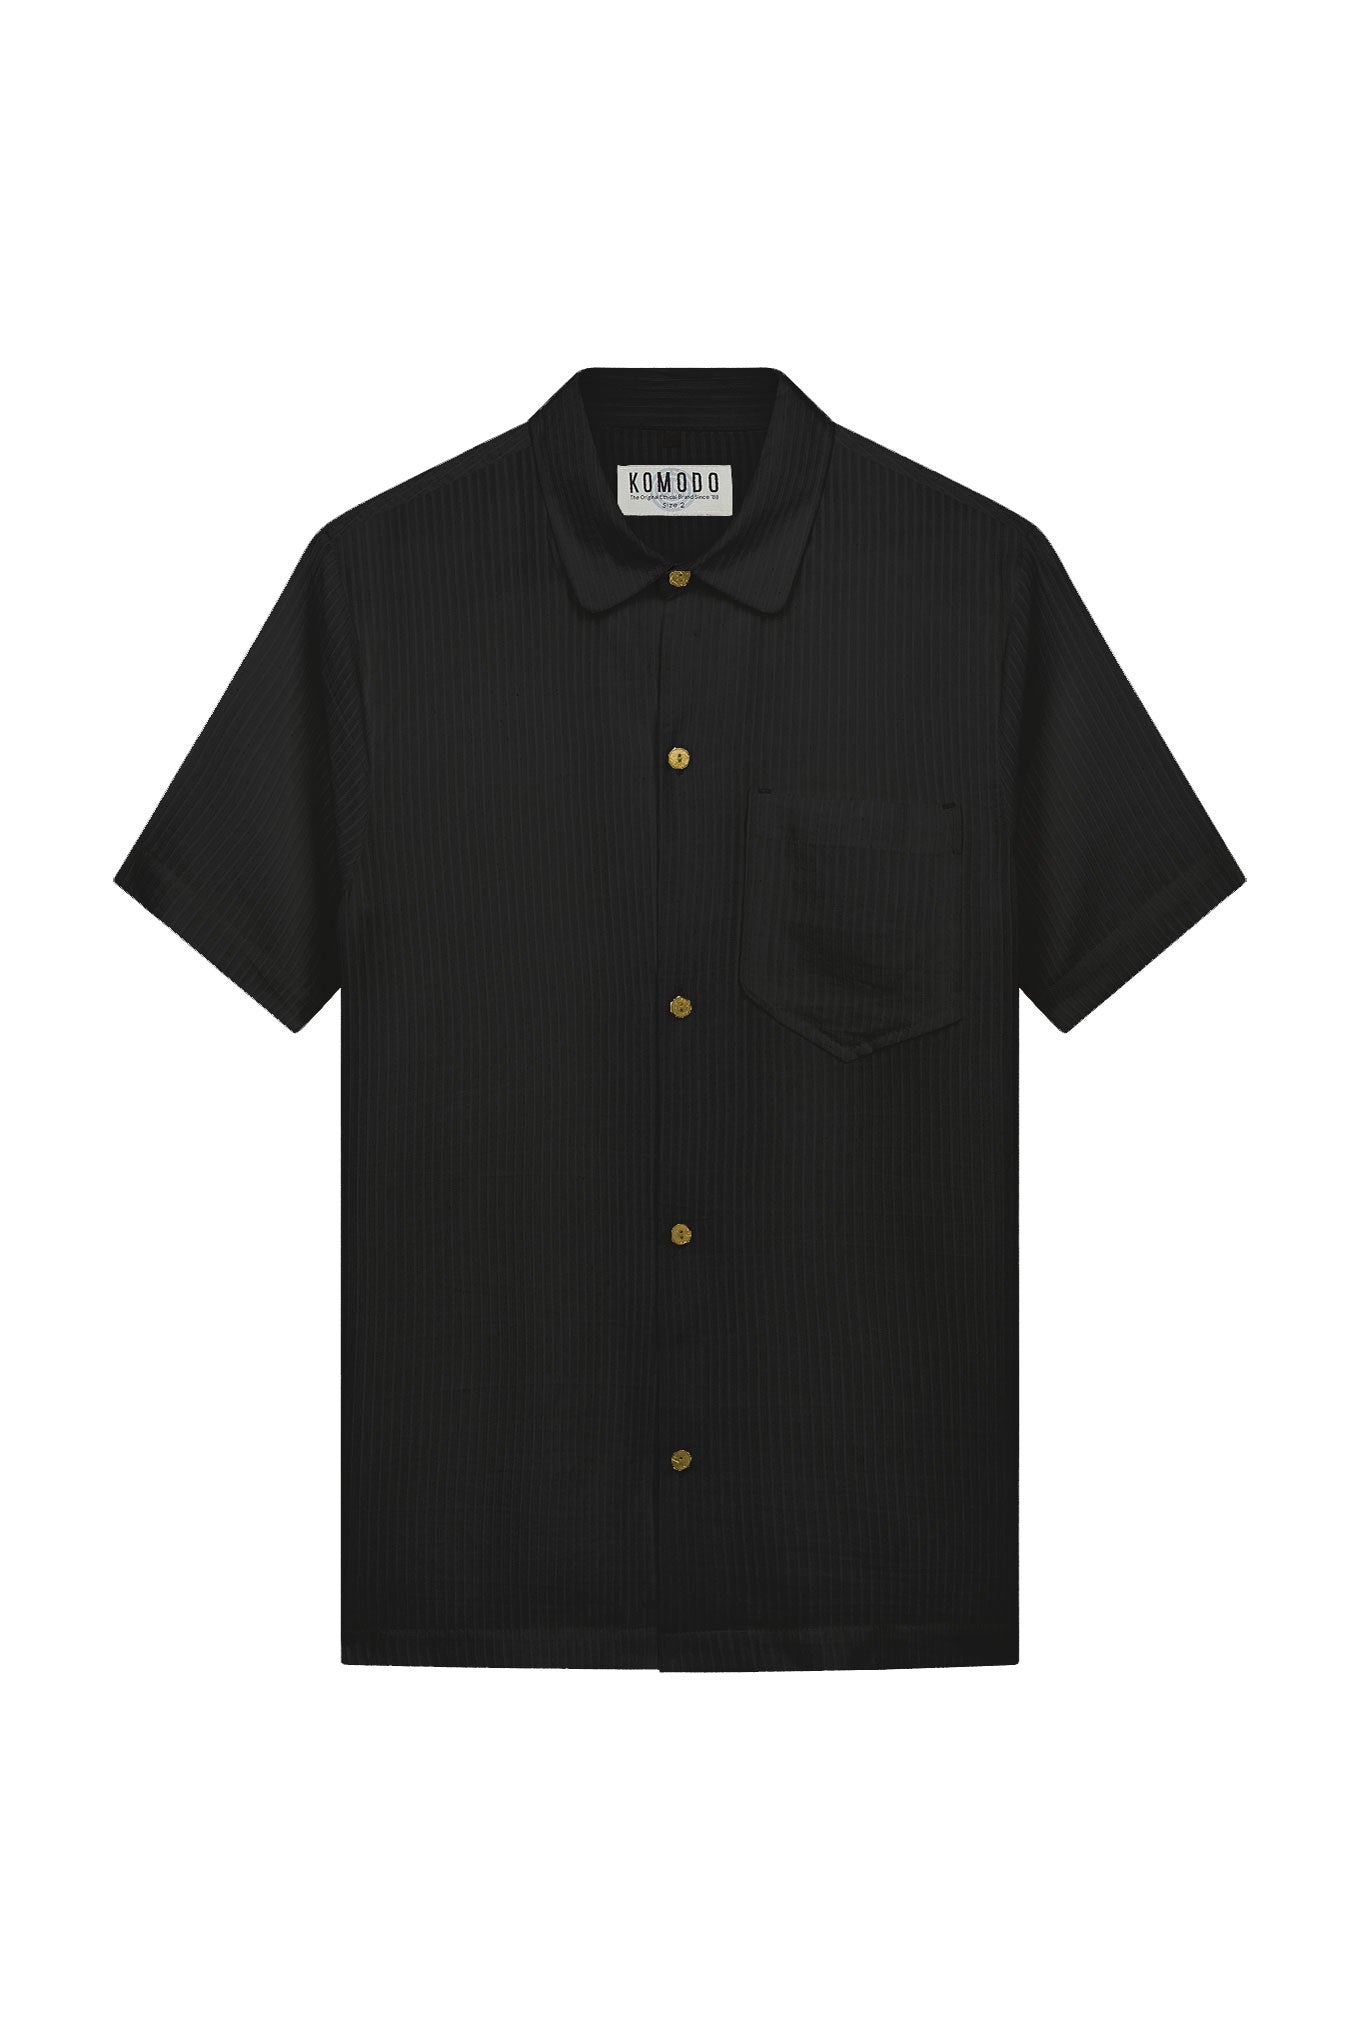 SPINDRIFT Corn Fabric Shirt - Black, Small